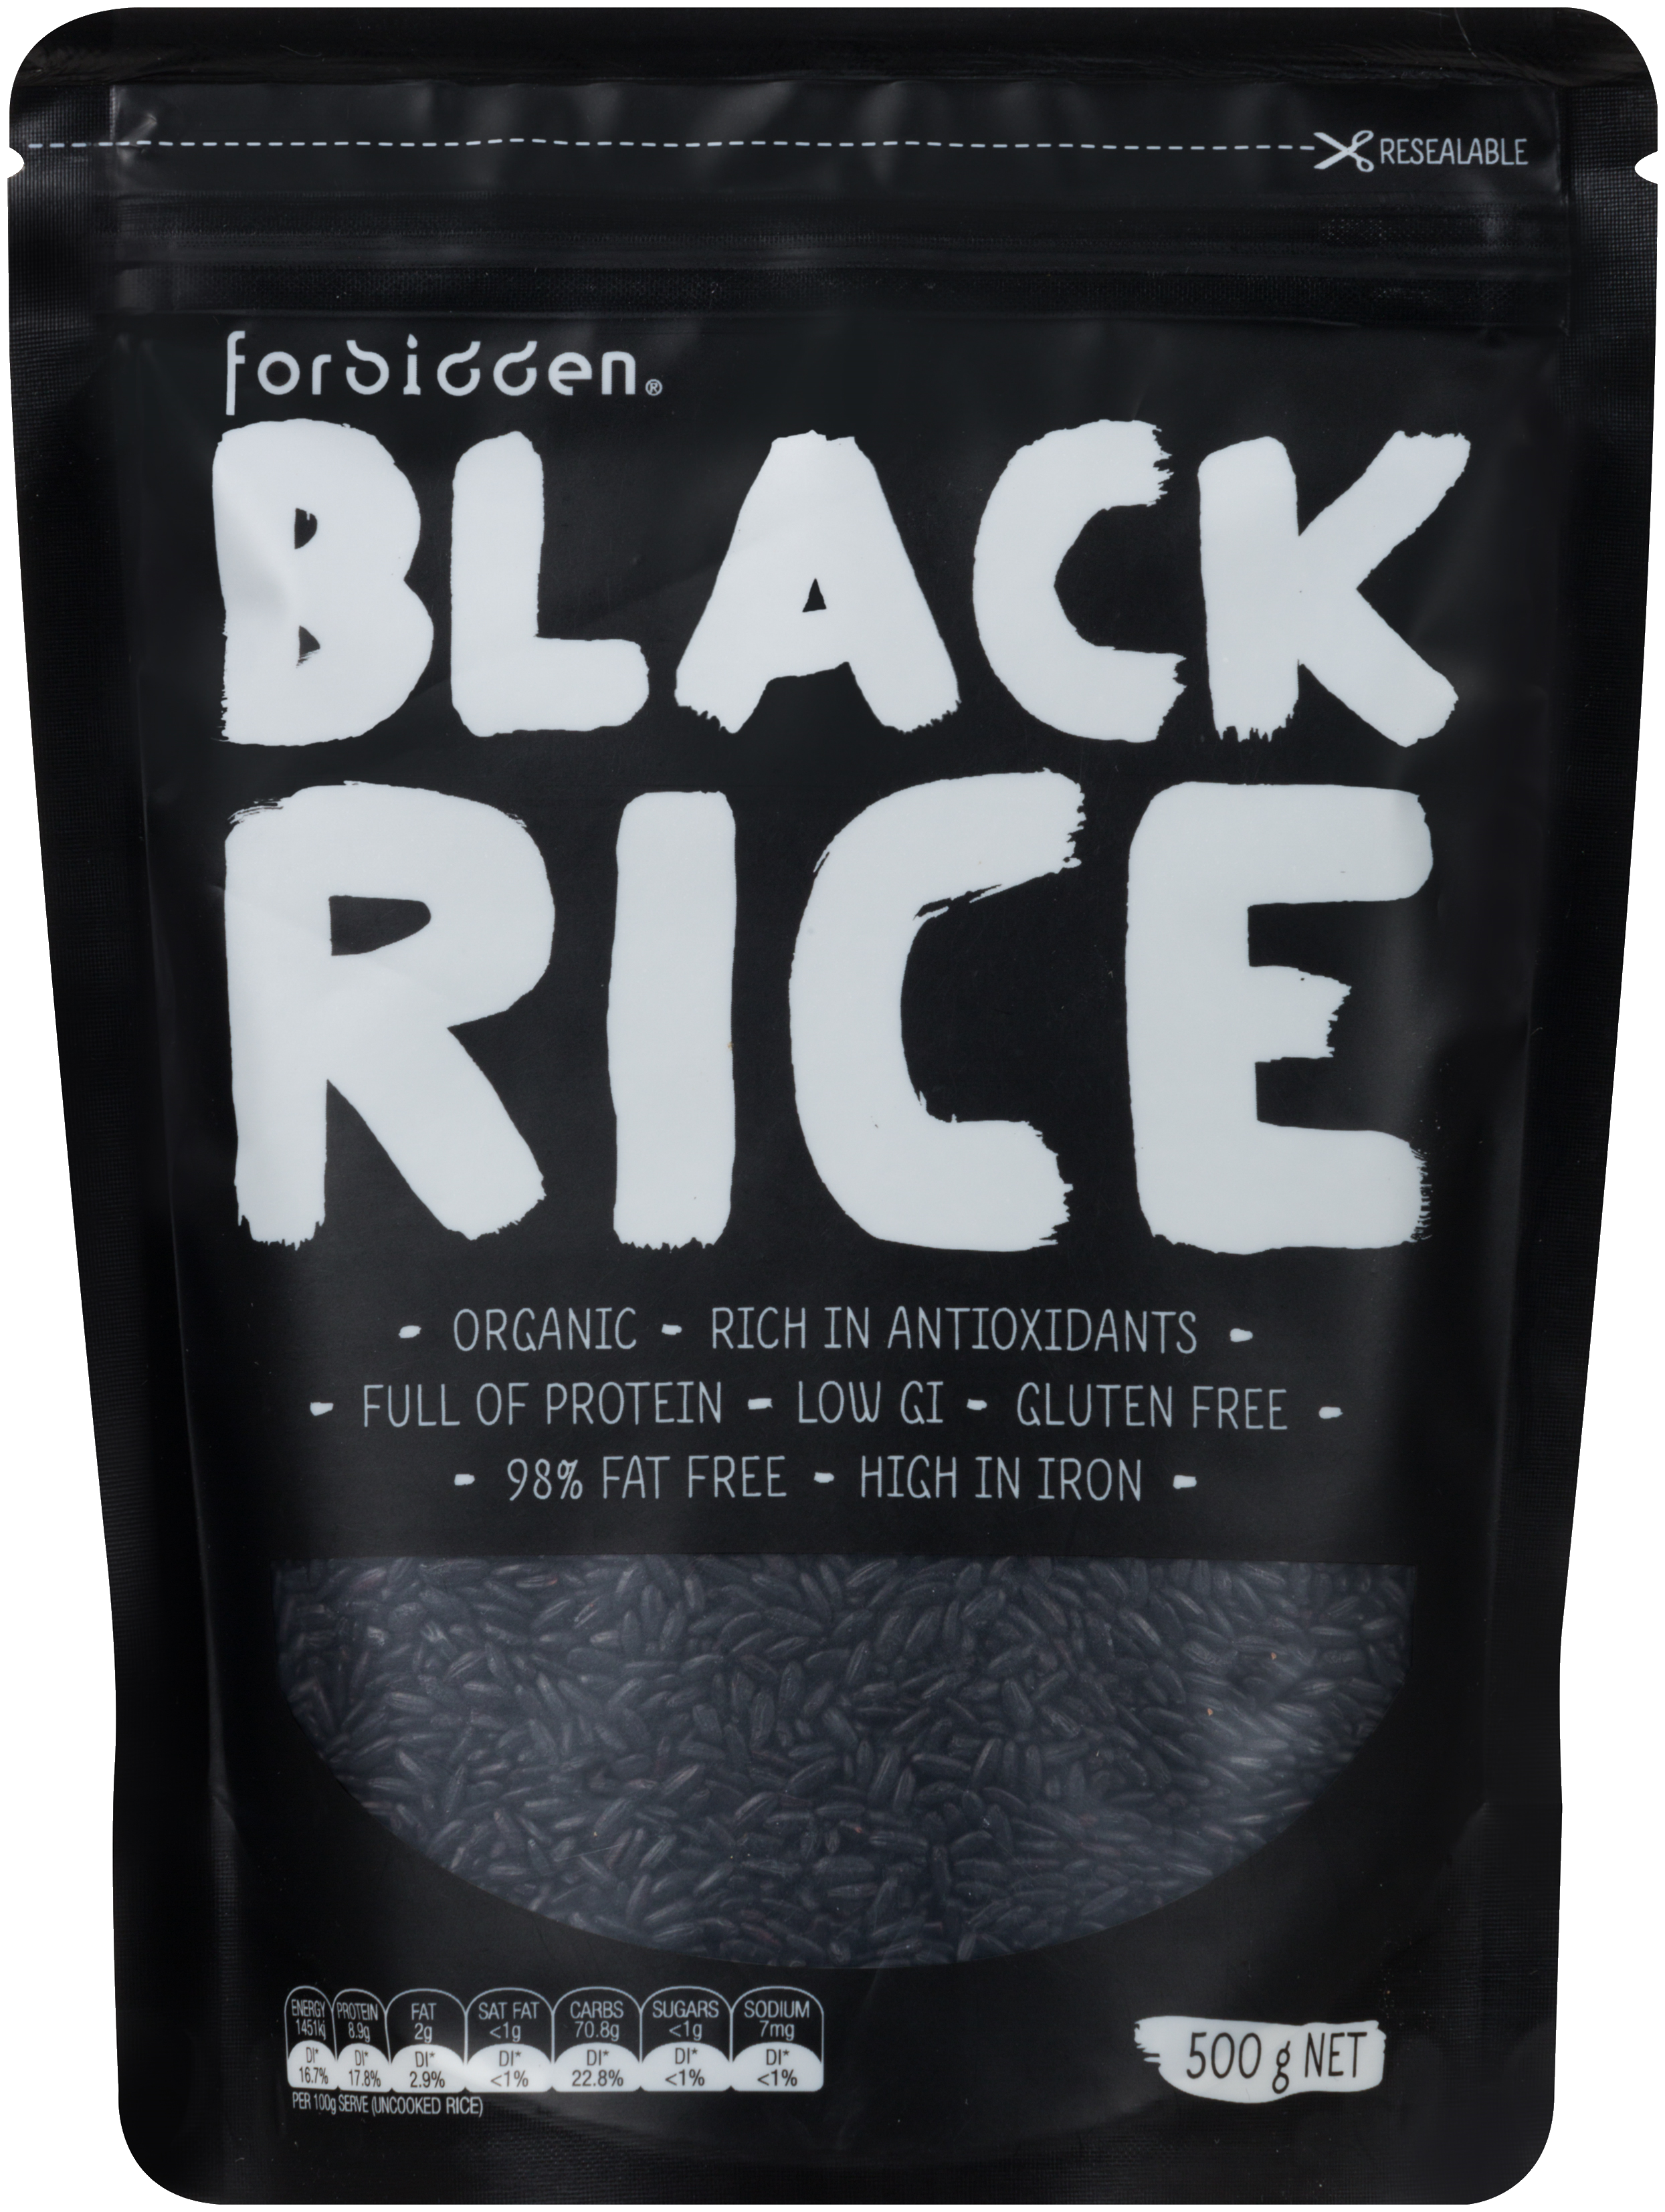 Black Rice Forbidden Certified Organic (500g)